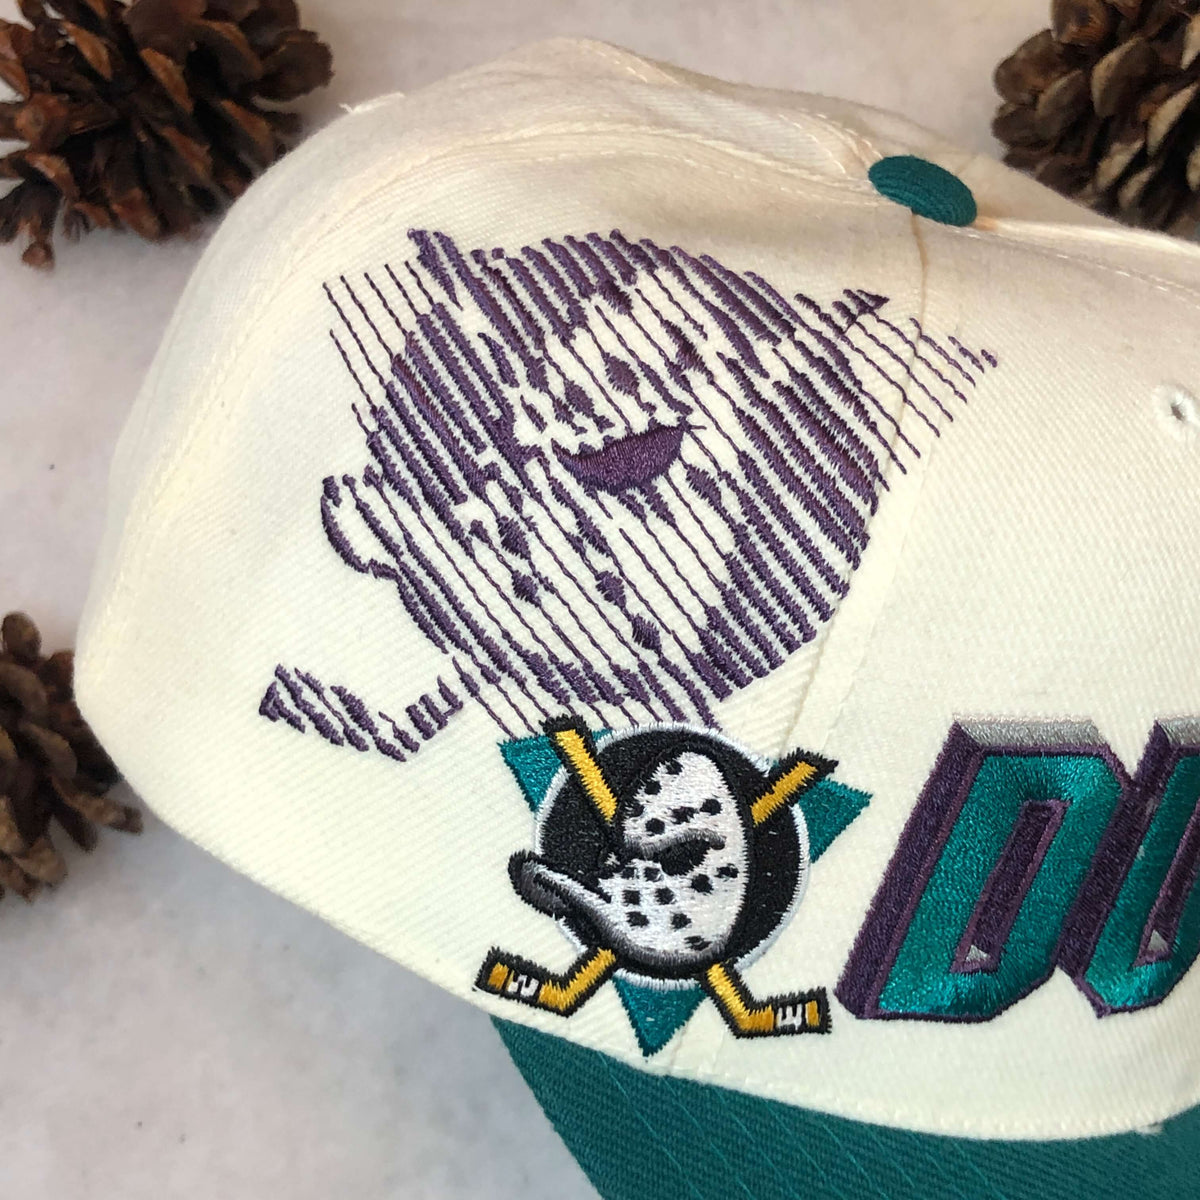 Vintage Anaheim Mighty Ducks Snapback Hat Sports Specialties Back Scri –  Laundry